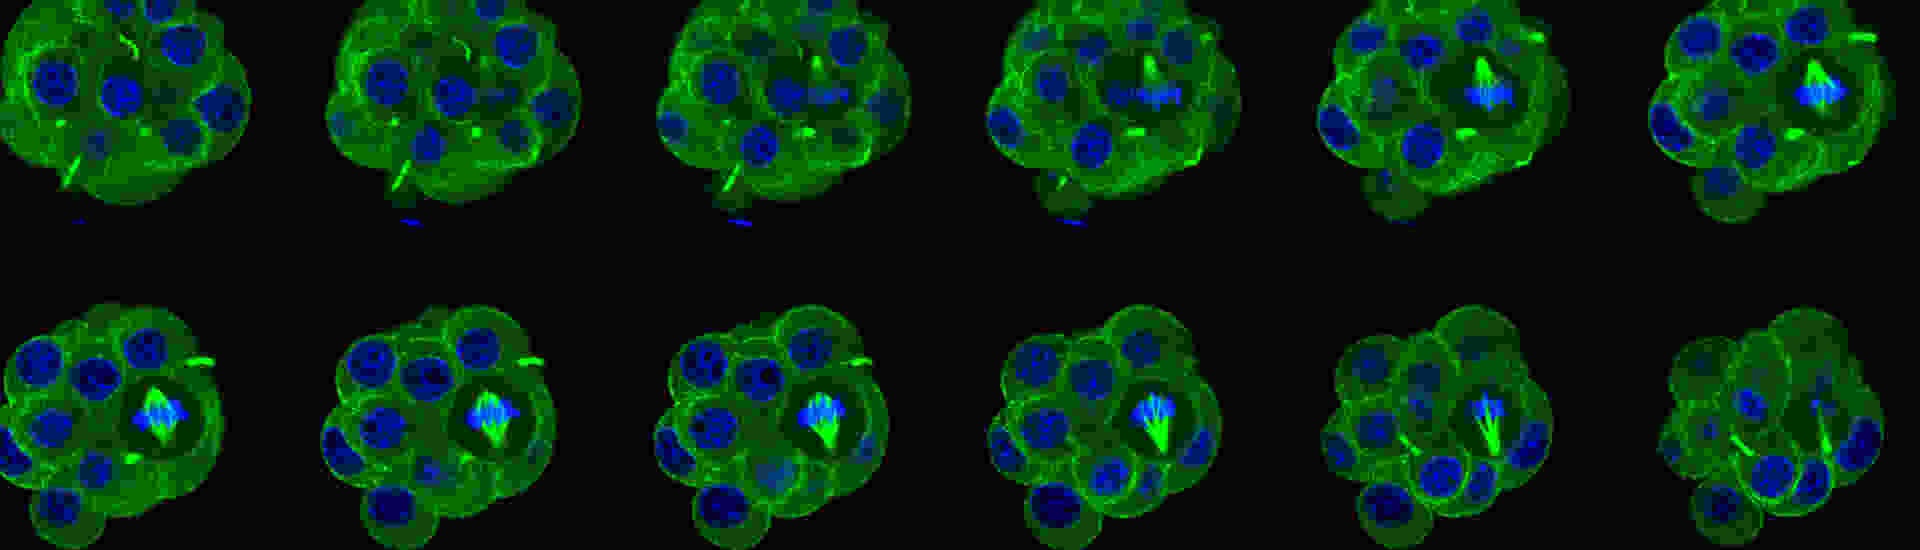 bmb research hero fluorescent cells dividing.jpg